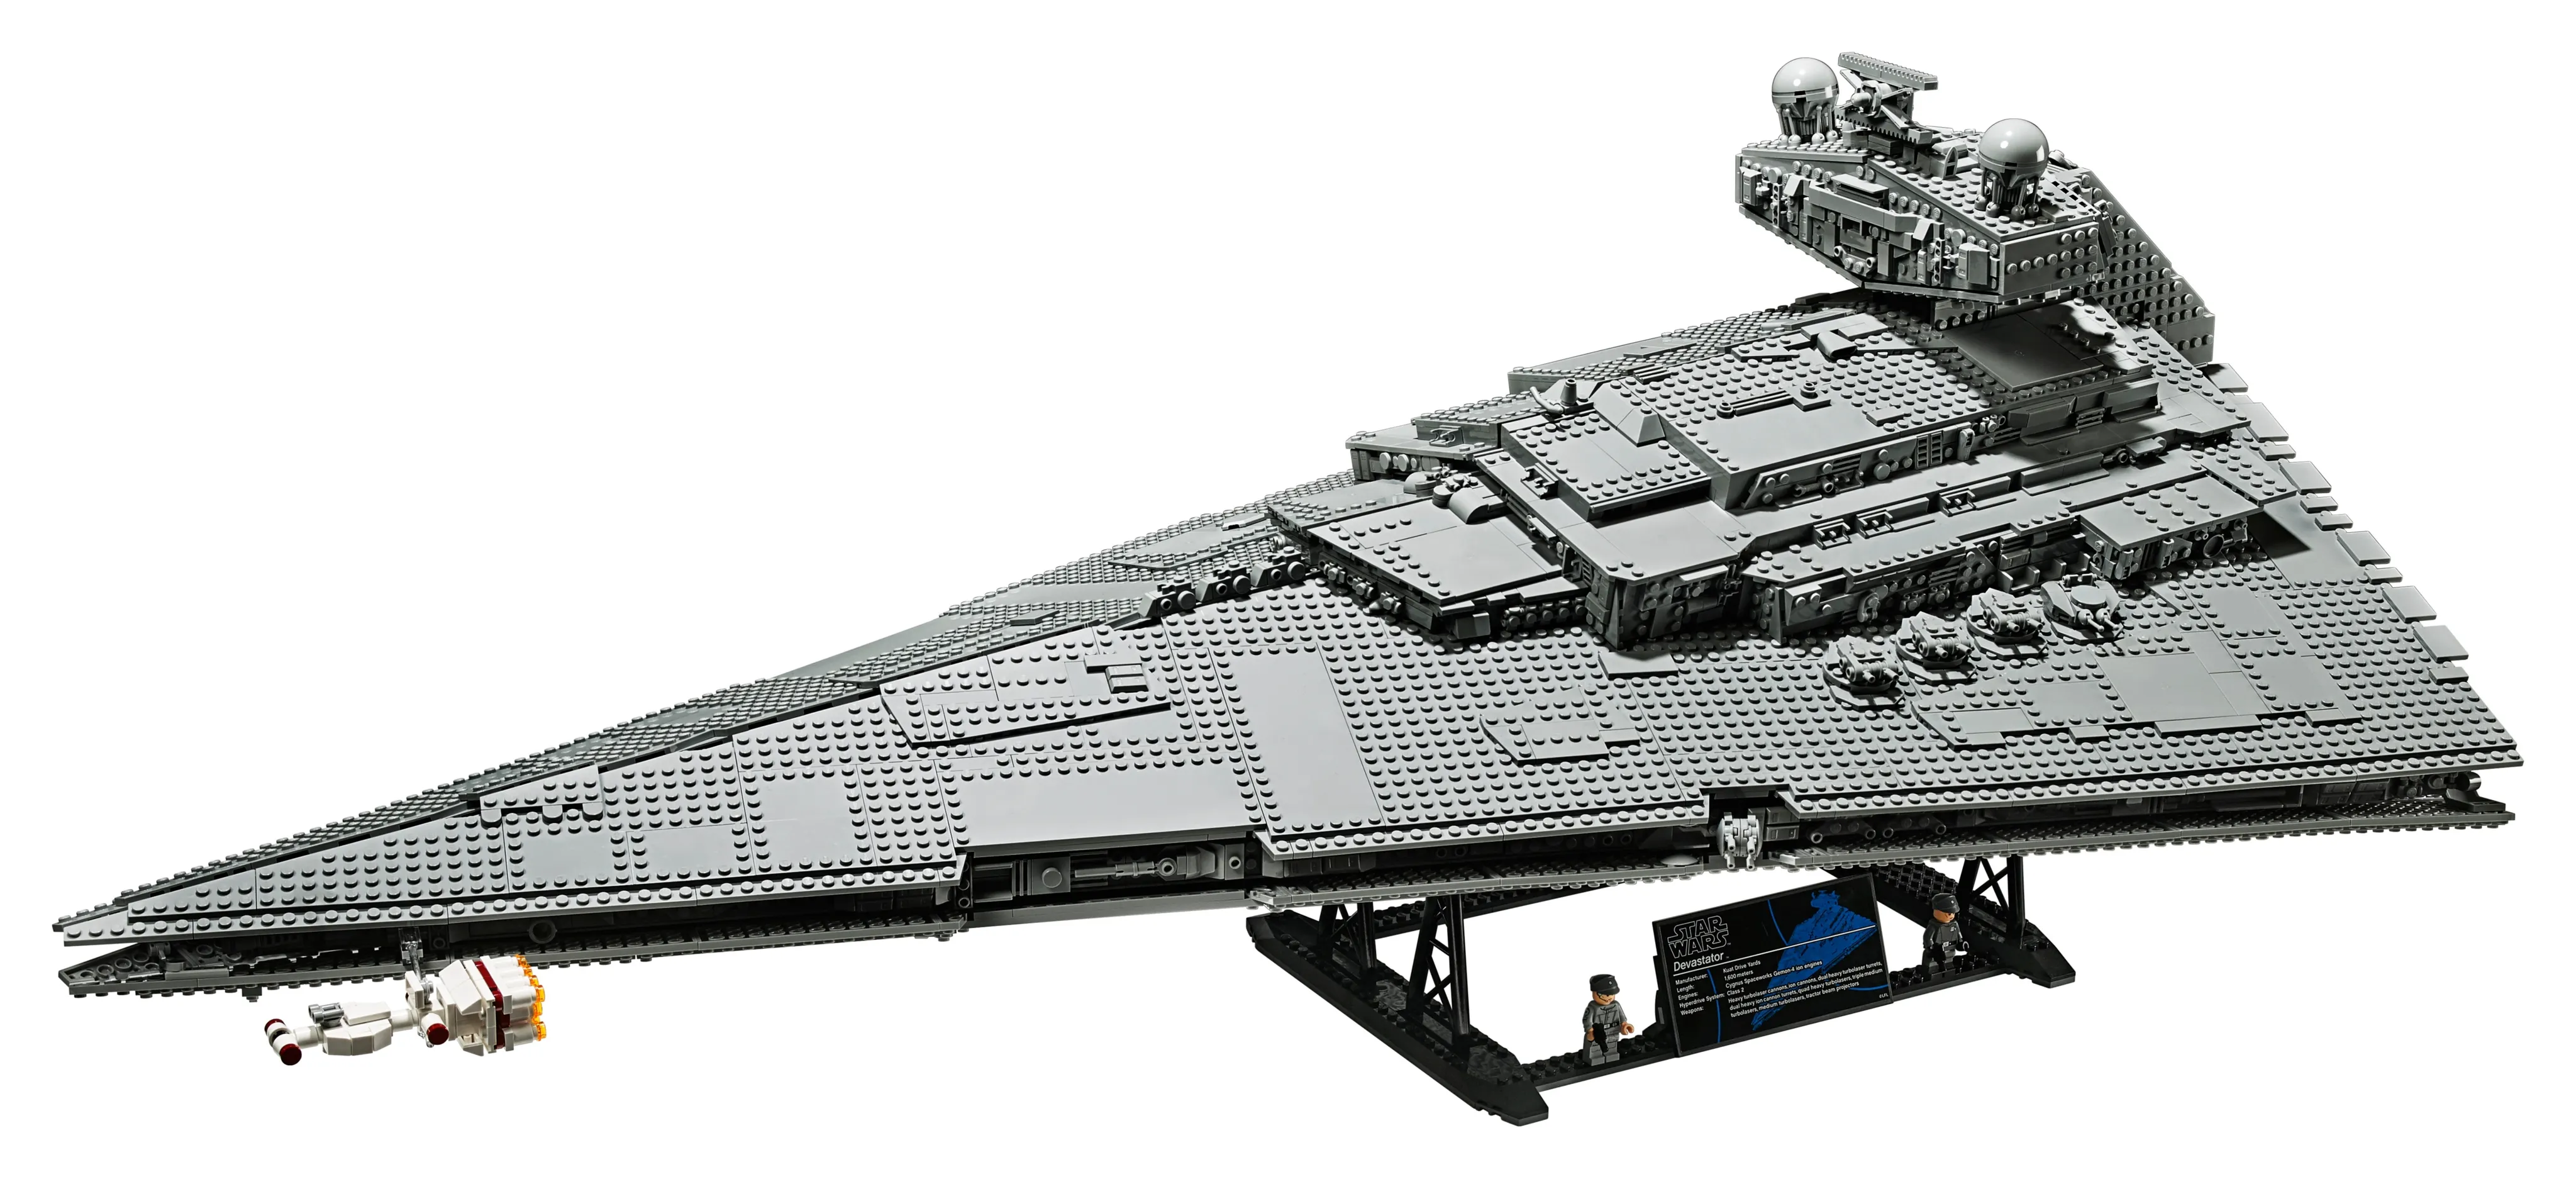 Star Wars™ UCS Imperial Star Destroyer Gallery